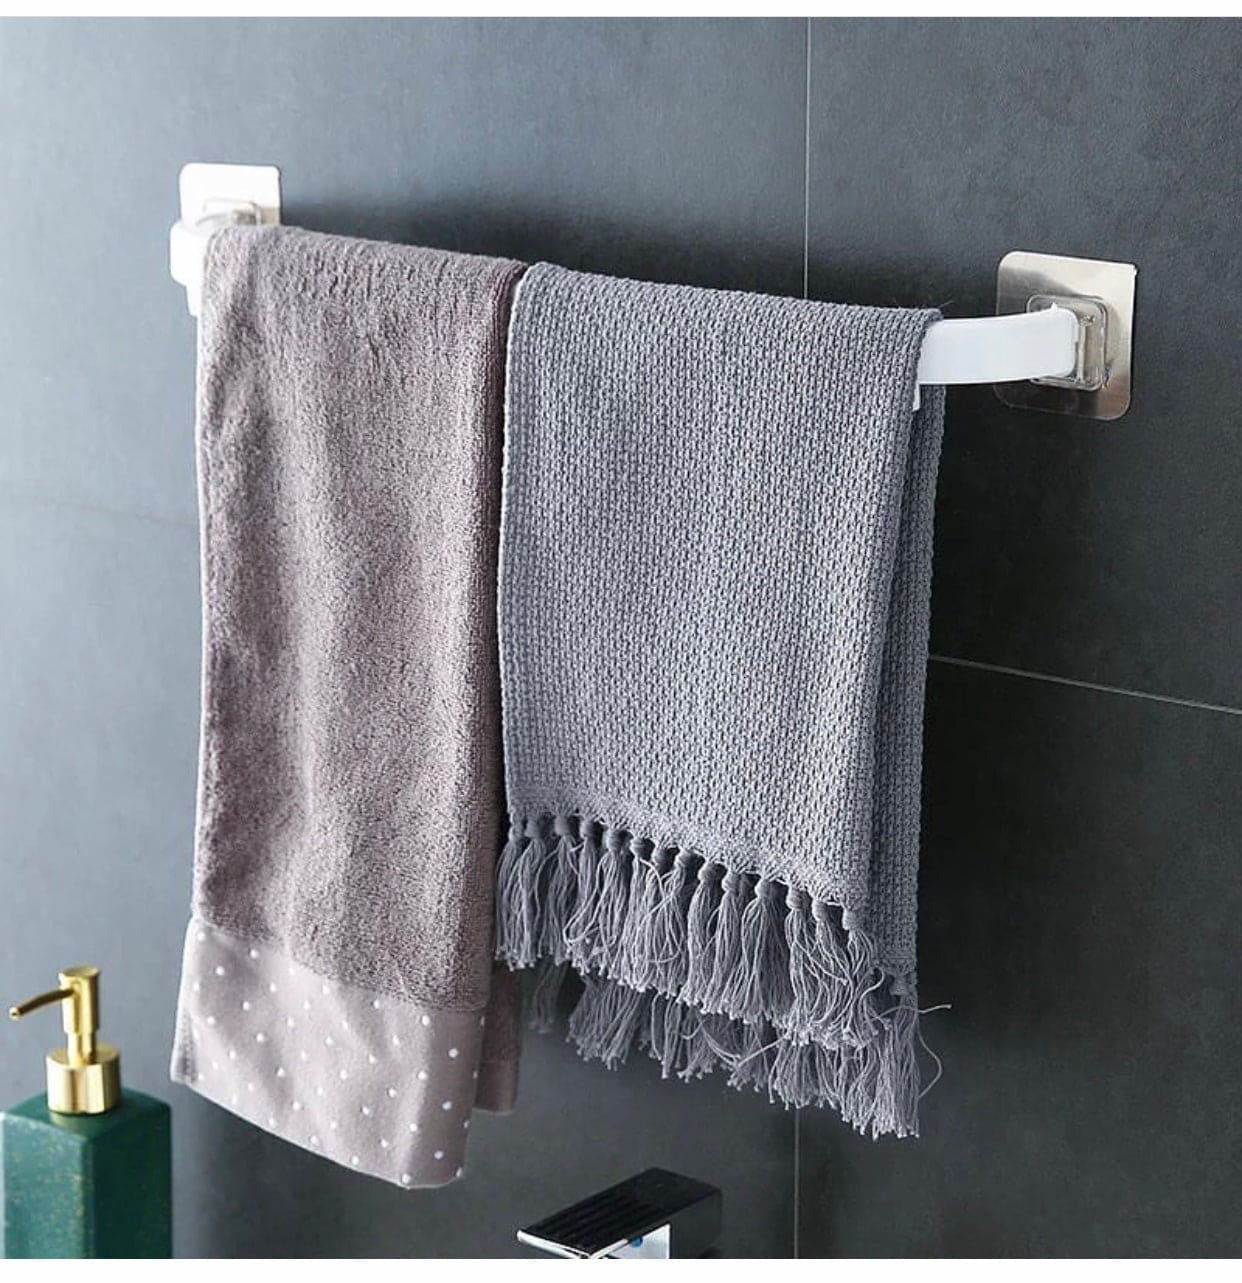 Towel Stand For Bathroom, Self Adhesive Punch-Free Plastic Bathroom Towel Bar, Modern Towel Rail Bathroom for Home Kitchen Bathroom